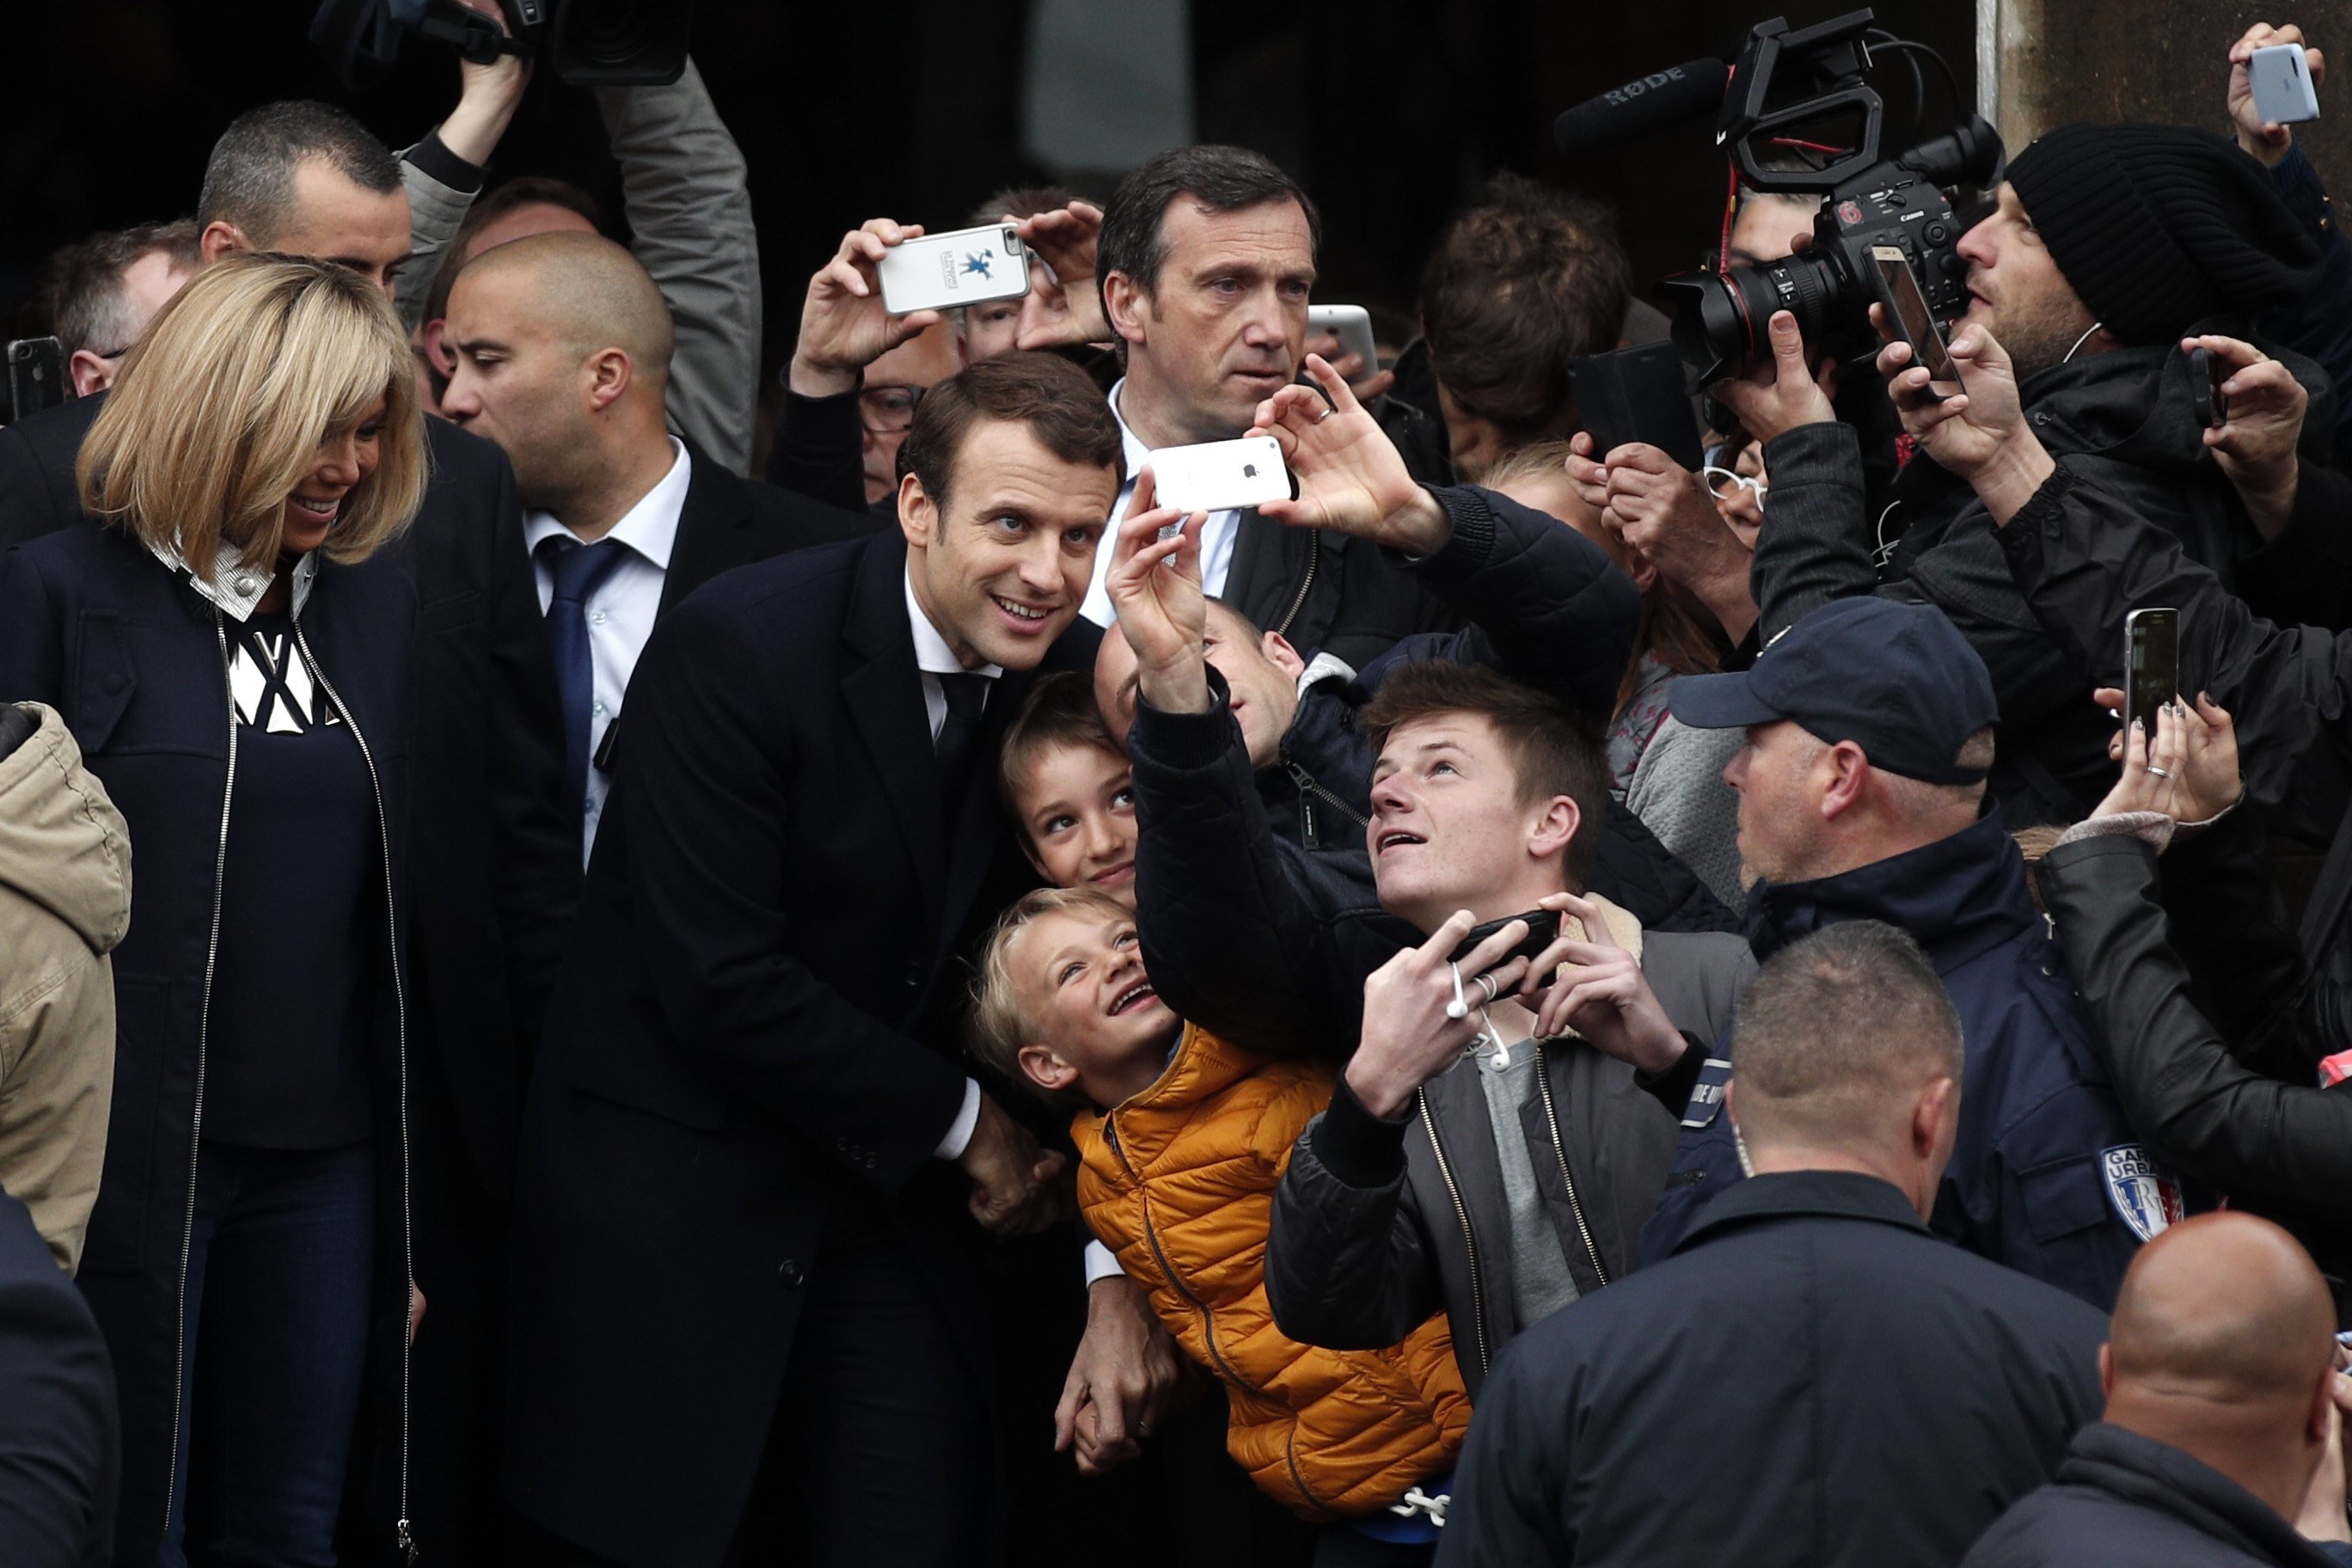 Emmanuel Macron, nou president de França